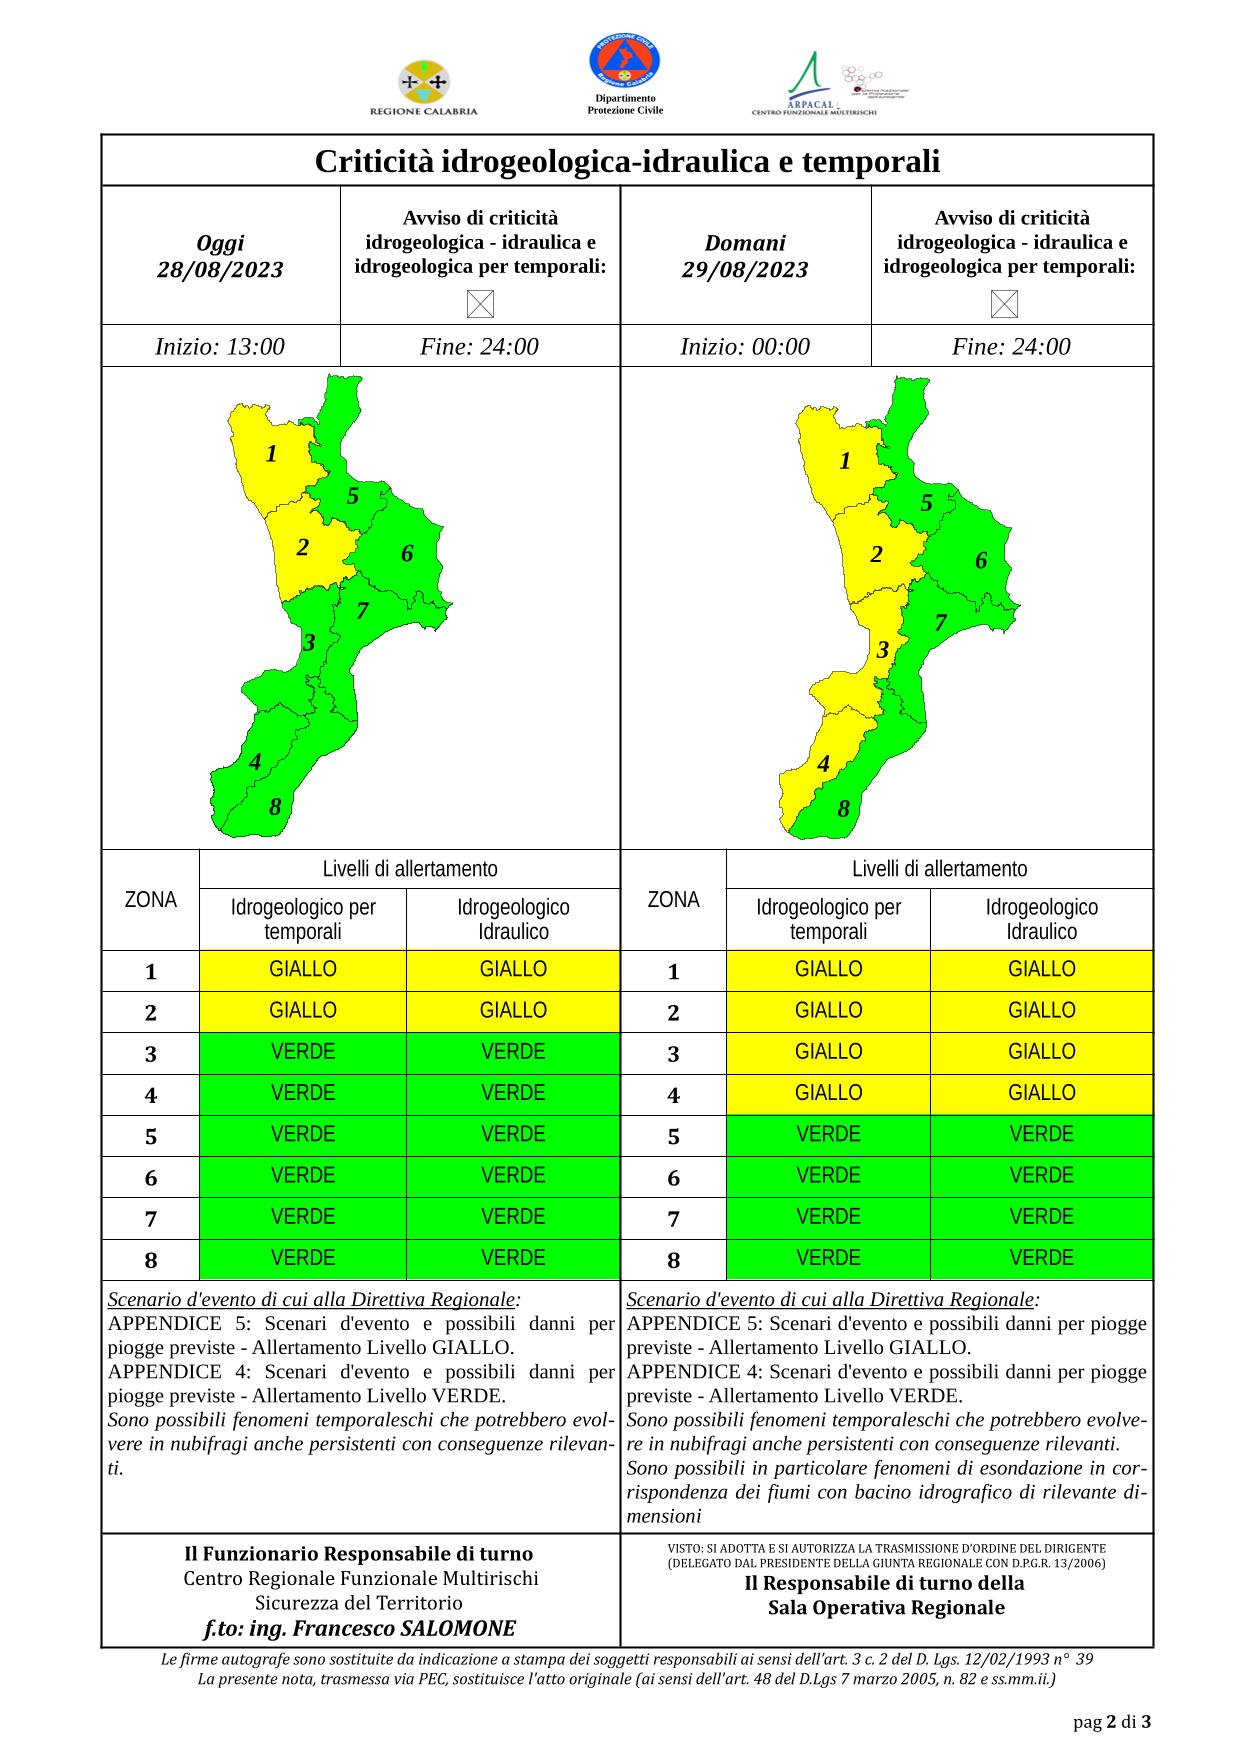 Criticità idrogeologica-idraulica e temporali in Calabria 28-08-2023